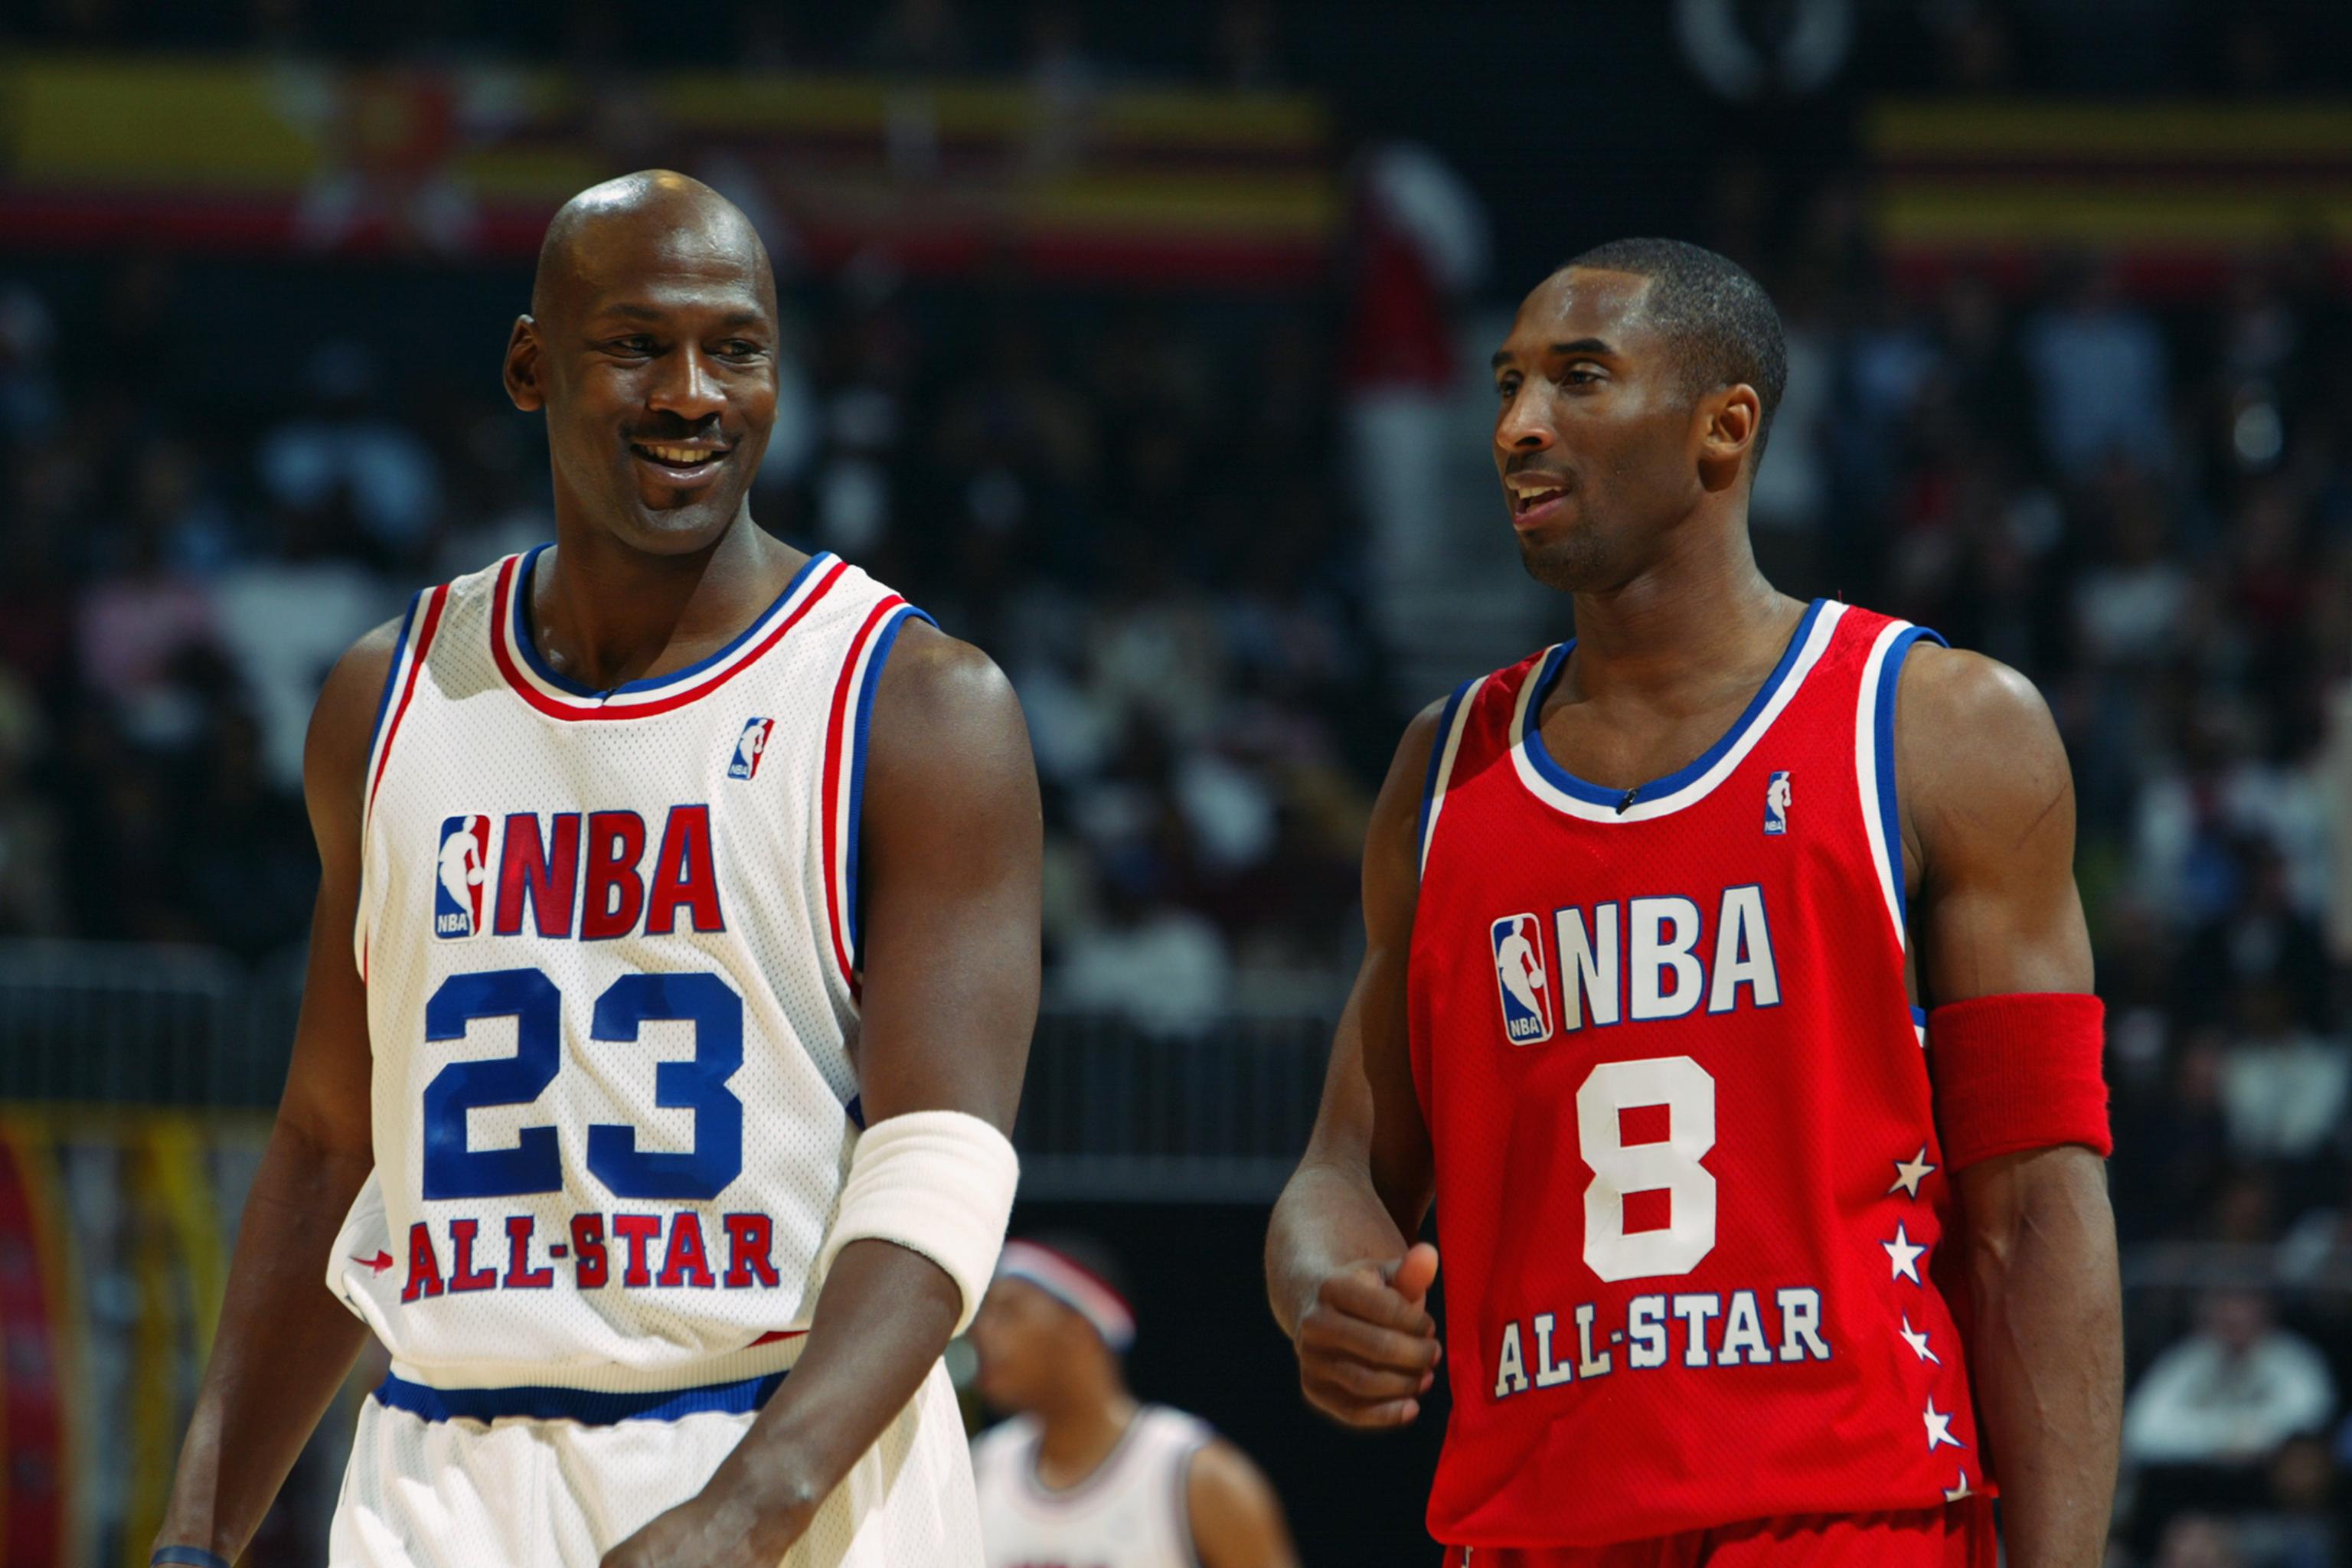 NBA great Michael Jordan will present Kobe Bryant for basketball